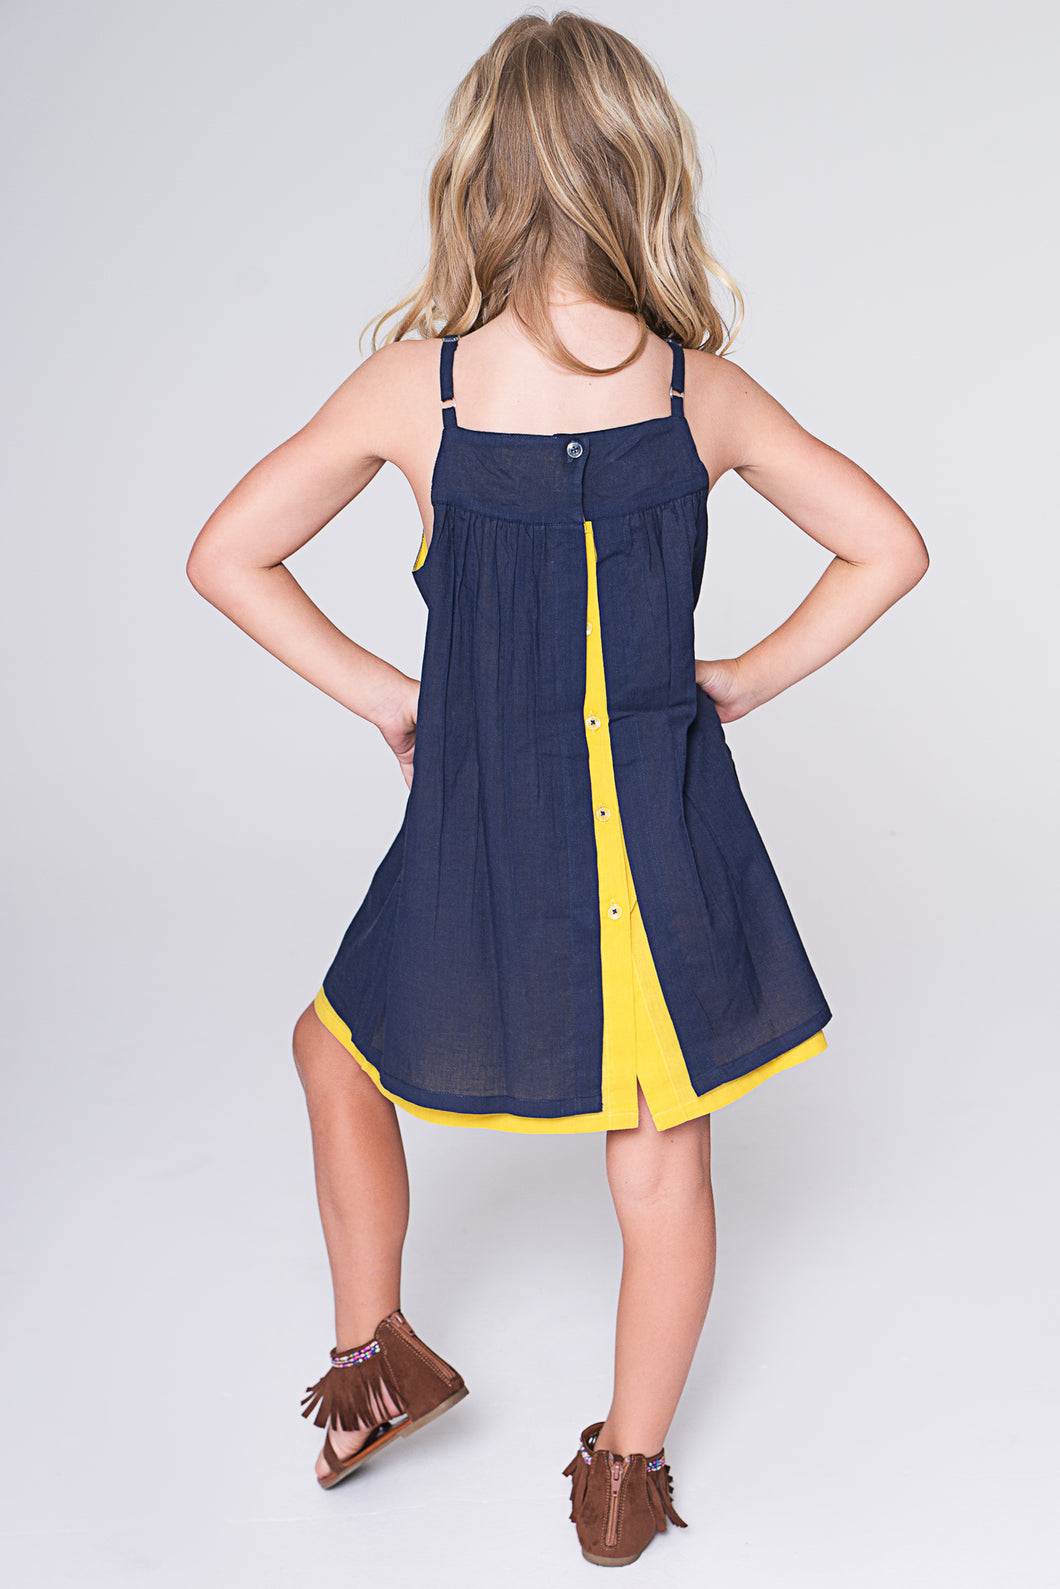 Blue and Yellow Layered Dress - Kids Wholesale Boutique Clothing, Dress - Girls Dresses, Yo Baby Wholesale - Yo Baby